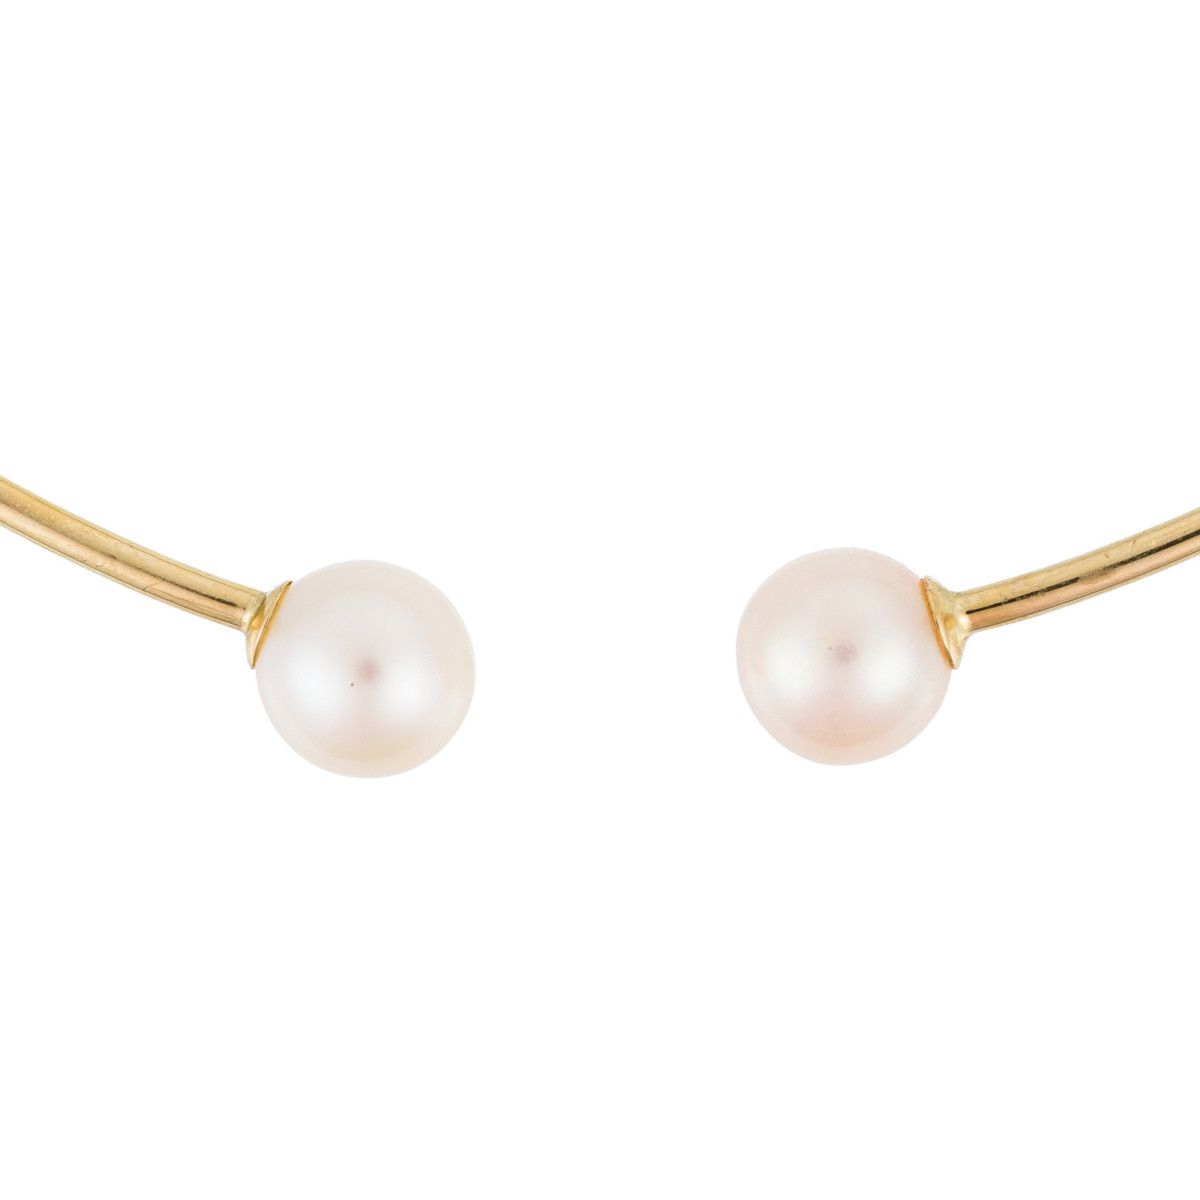 Bracelet jonc Or Jaune 375 et Perle blanche "Lovely Pearls"